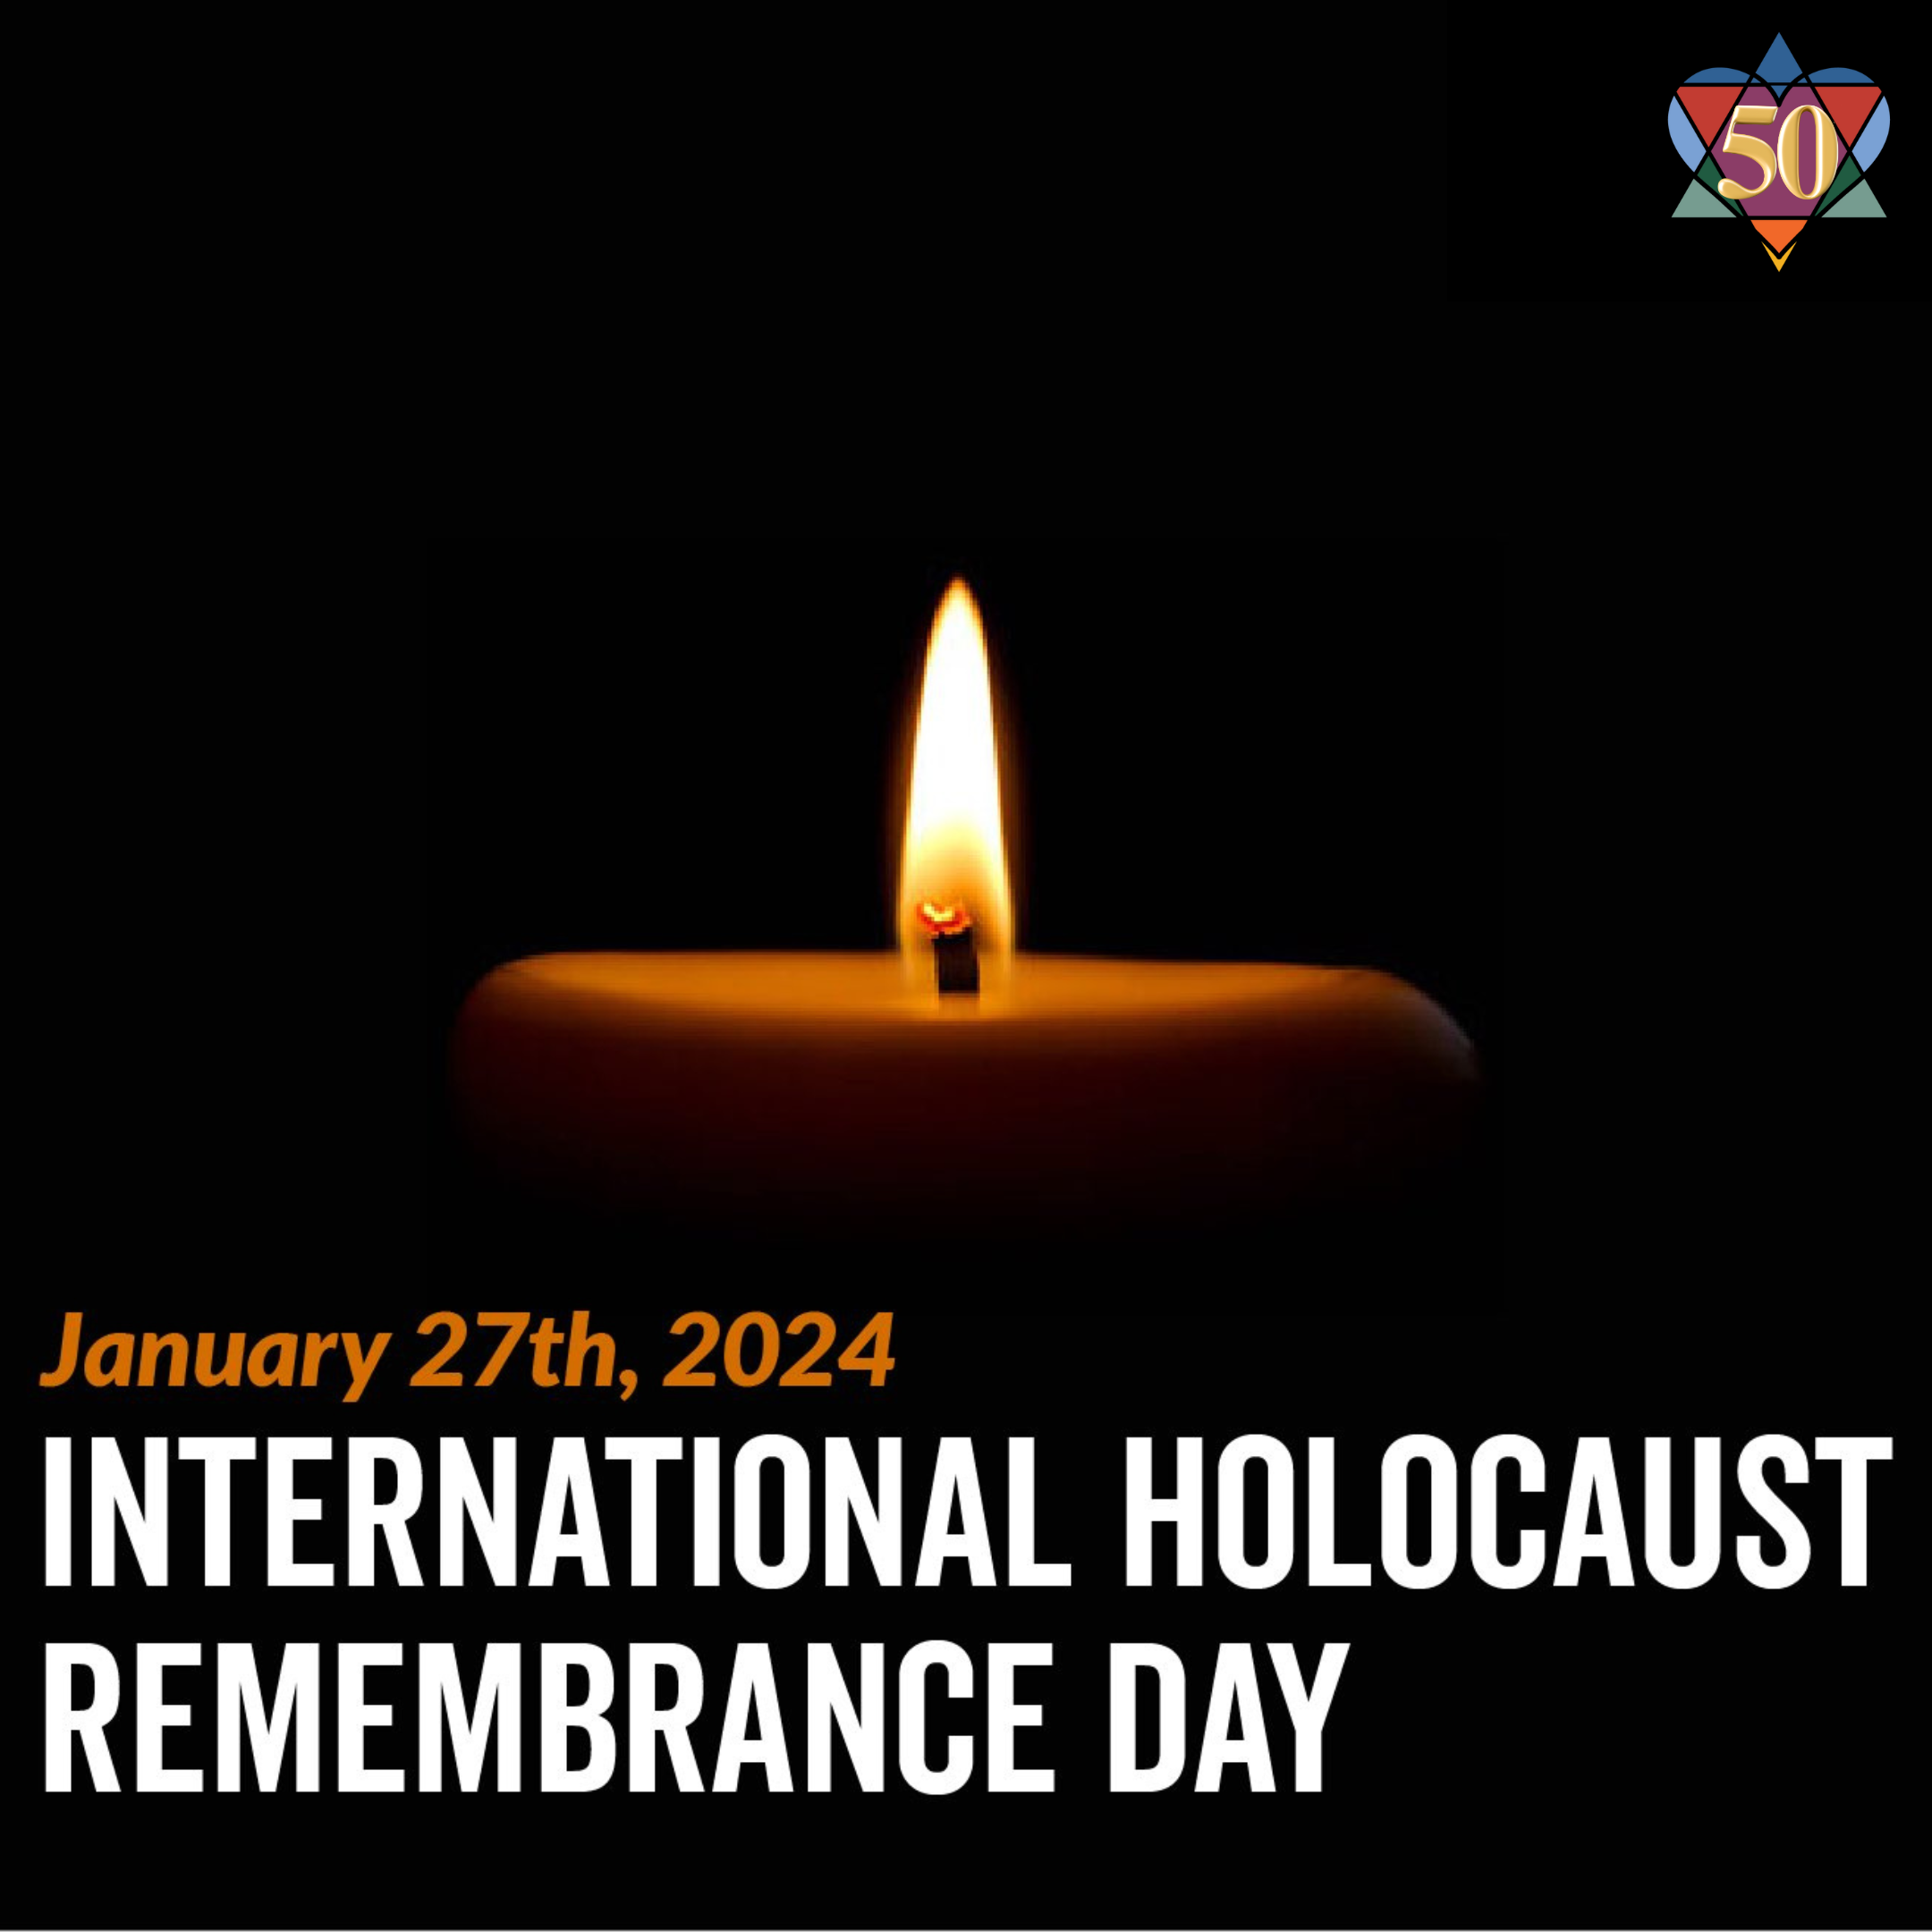 INTERNATIONAL HOLOCAUST REMEMBRANCE DAY